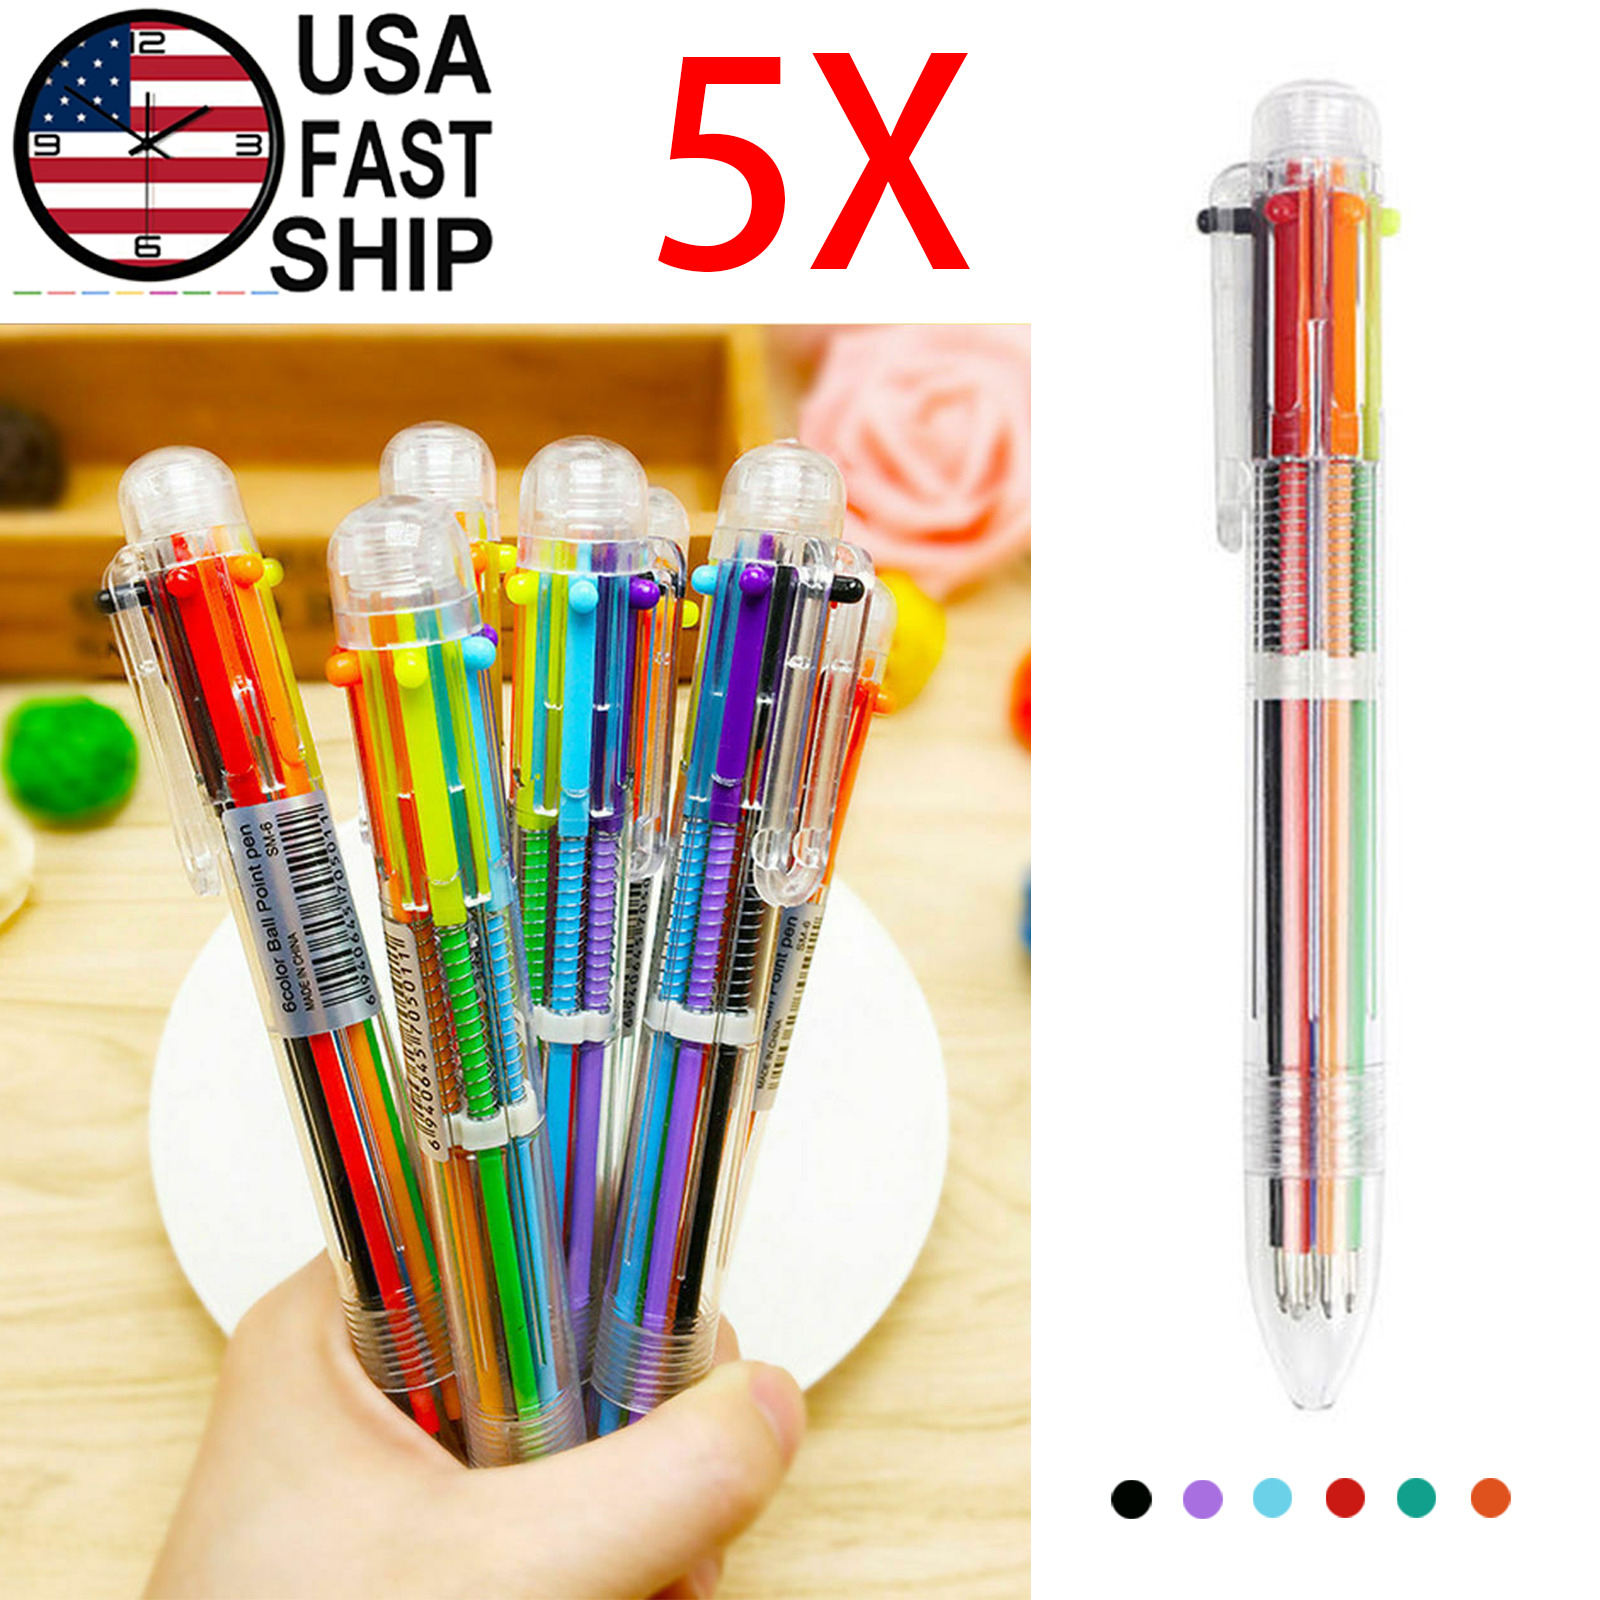 5X Multi-color Ballpoint Pen 6 in 1 Color Ball Point Pens Office School Kids